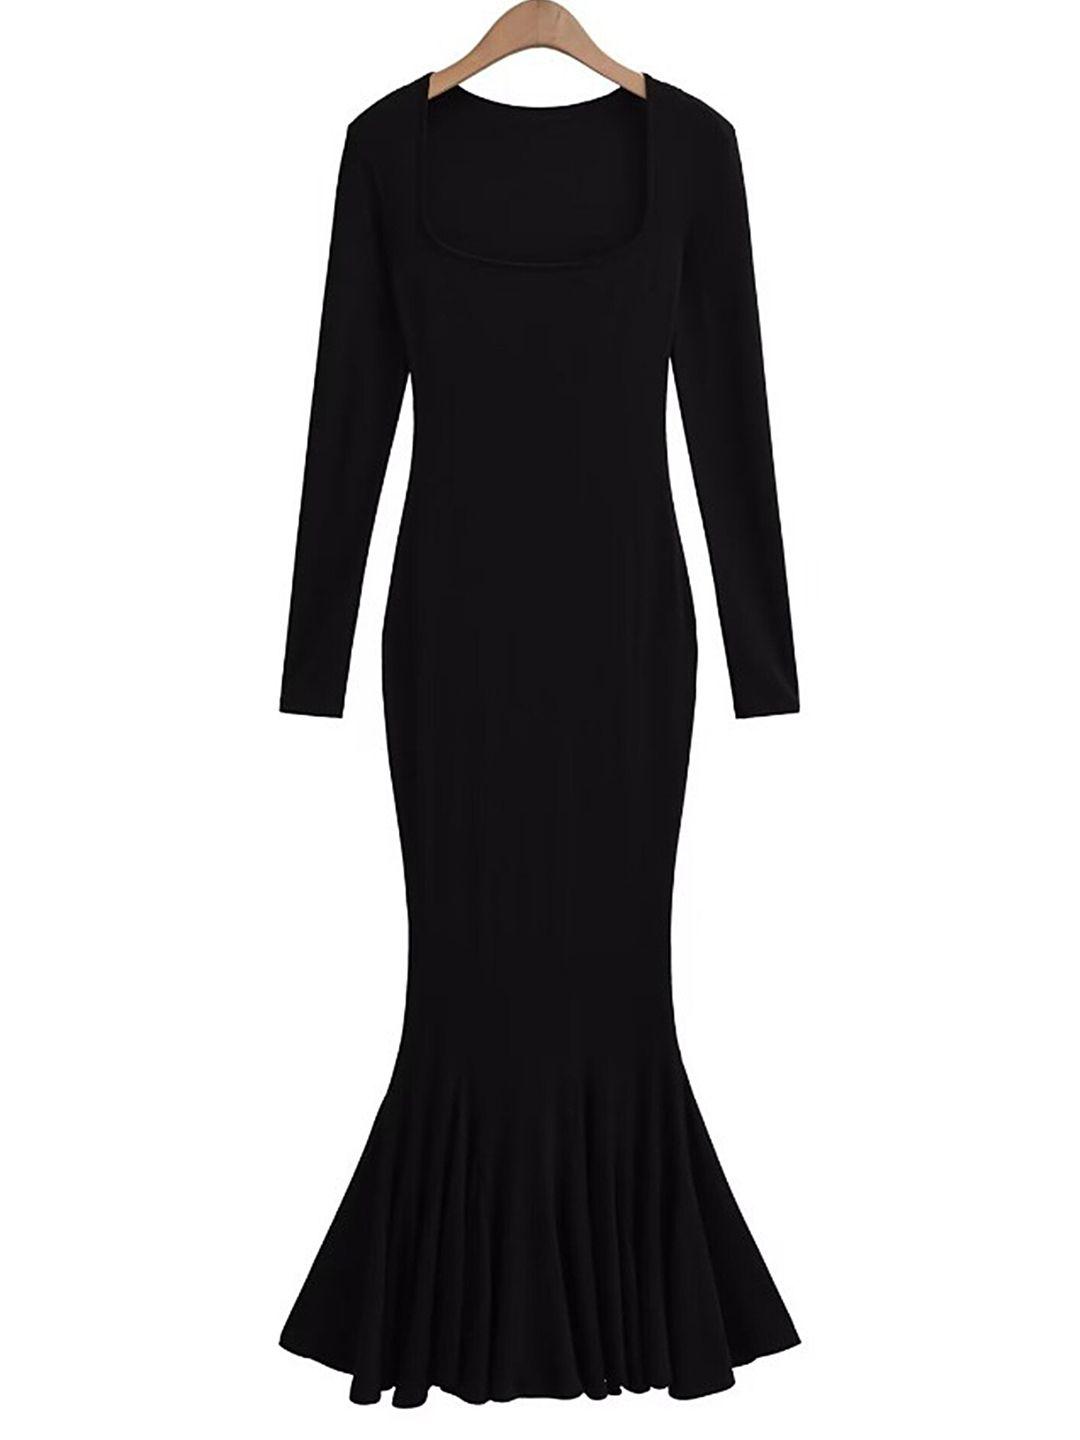 lulu & sky black dress